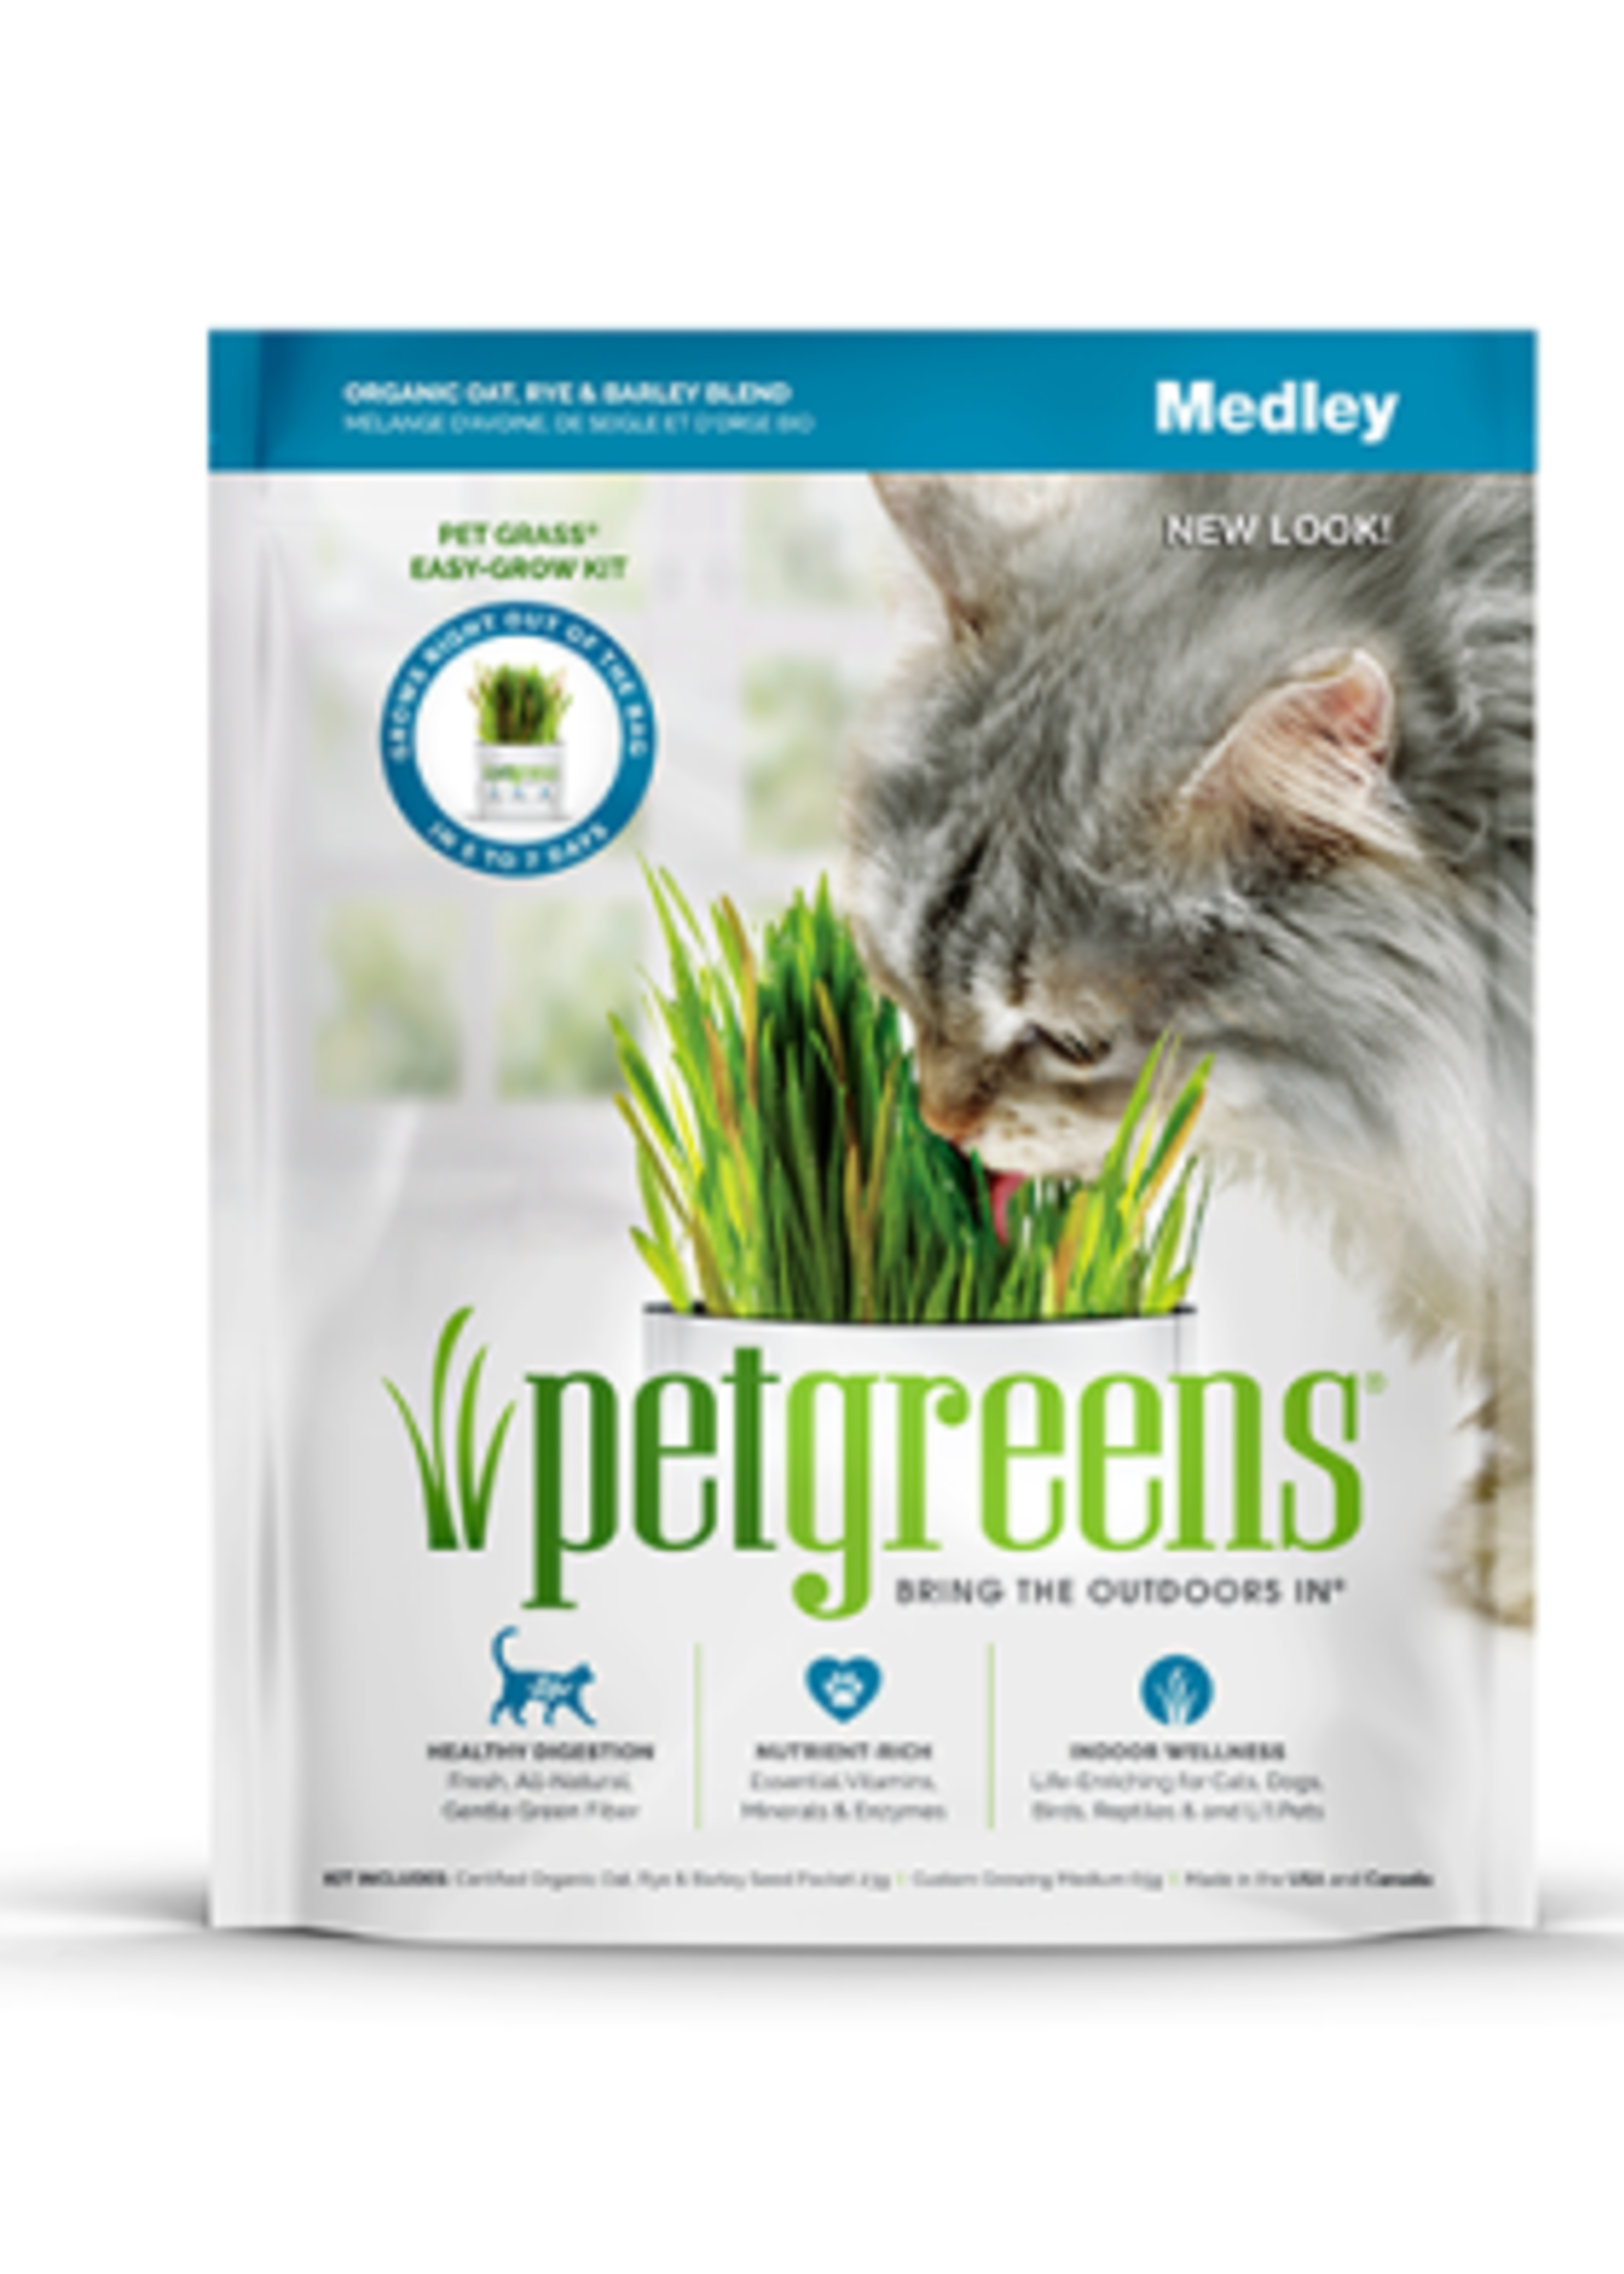 Pet Greens® Pet Greens® Medley Self-Grow Kit 3oz